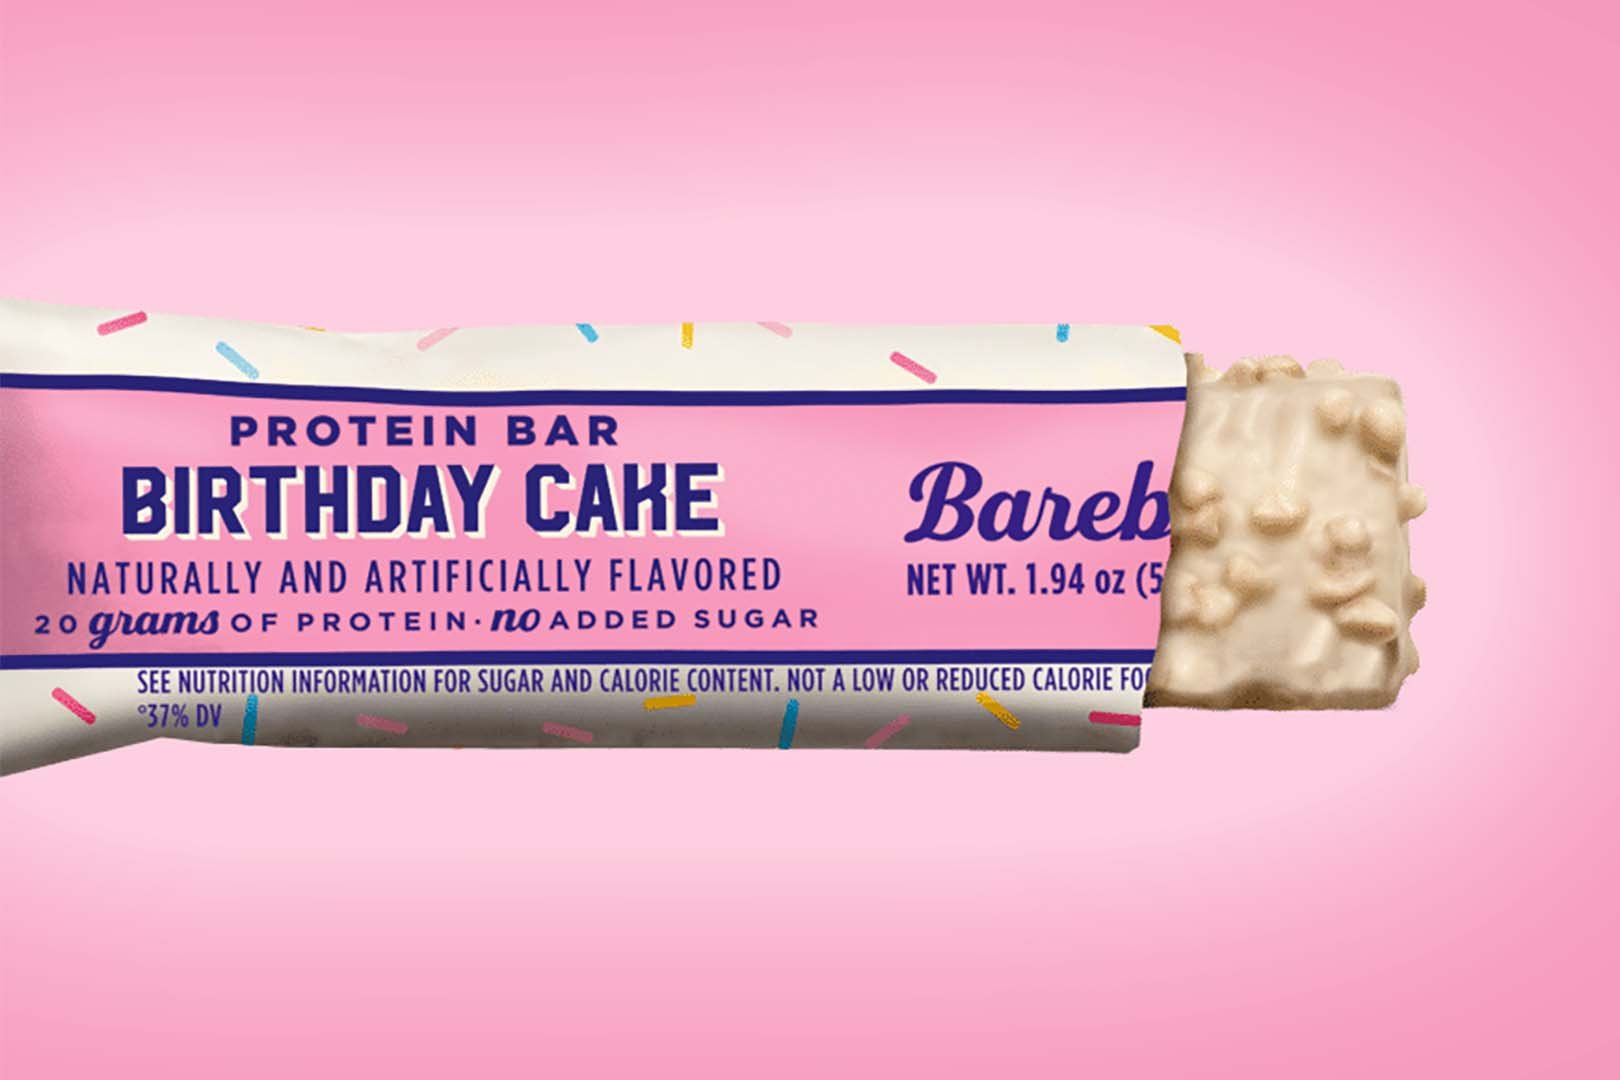 Birthday Cake Barebells Protein Bar Not Planned For Europe